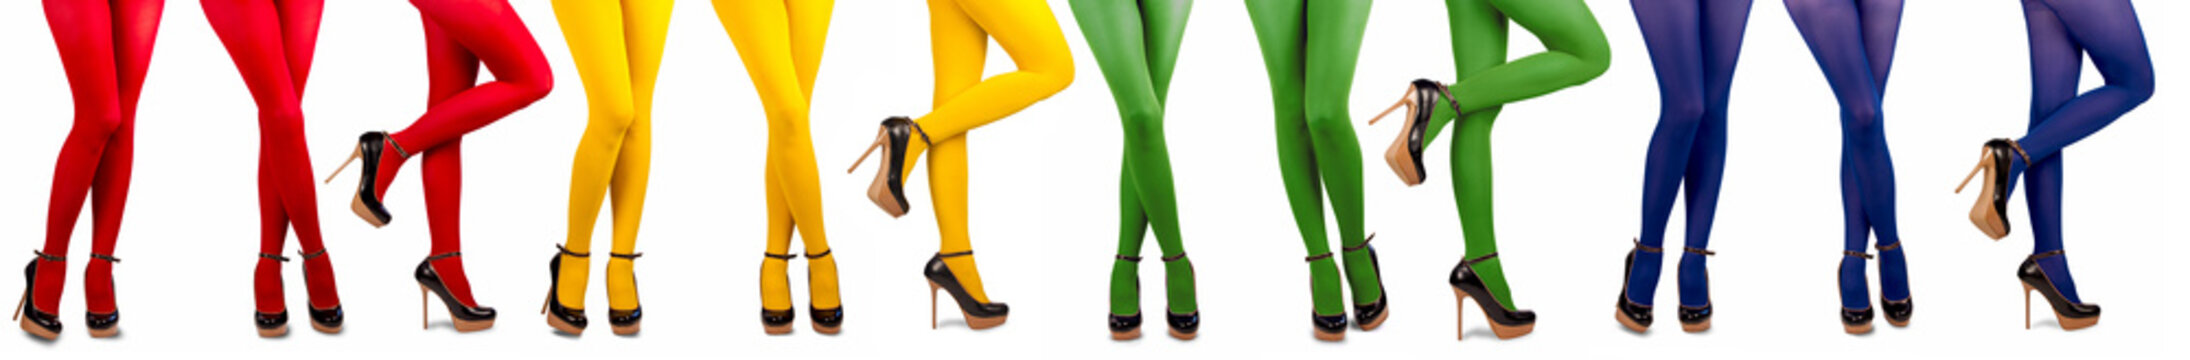 female legs in multicolored stockings